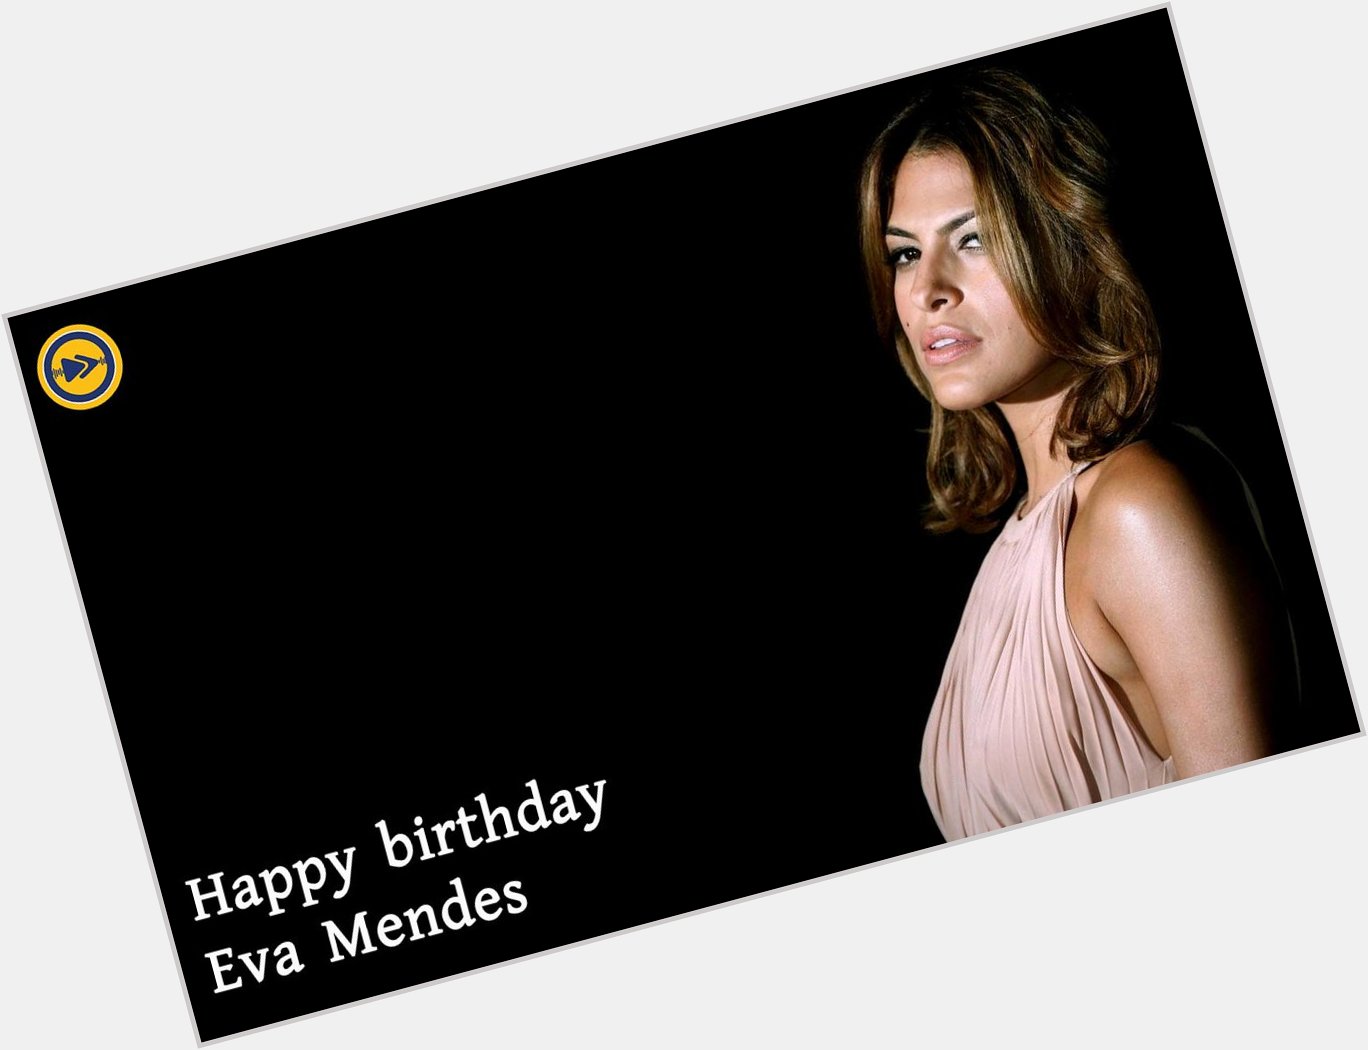 Happy birthday to the gorgeous actress of Hollywood, Eva Mendes!  